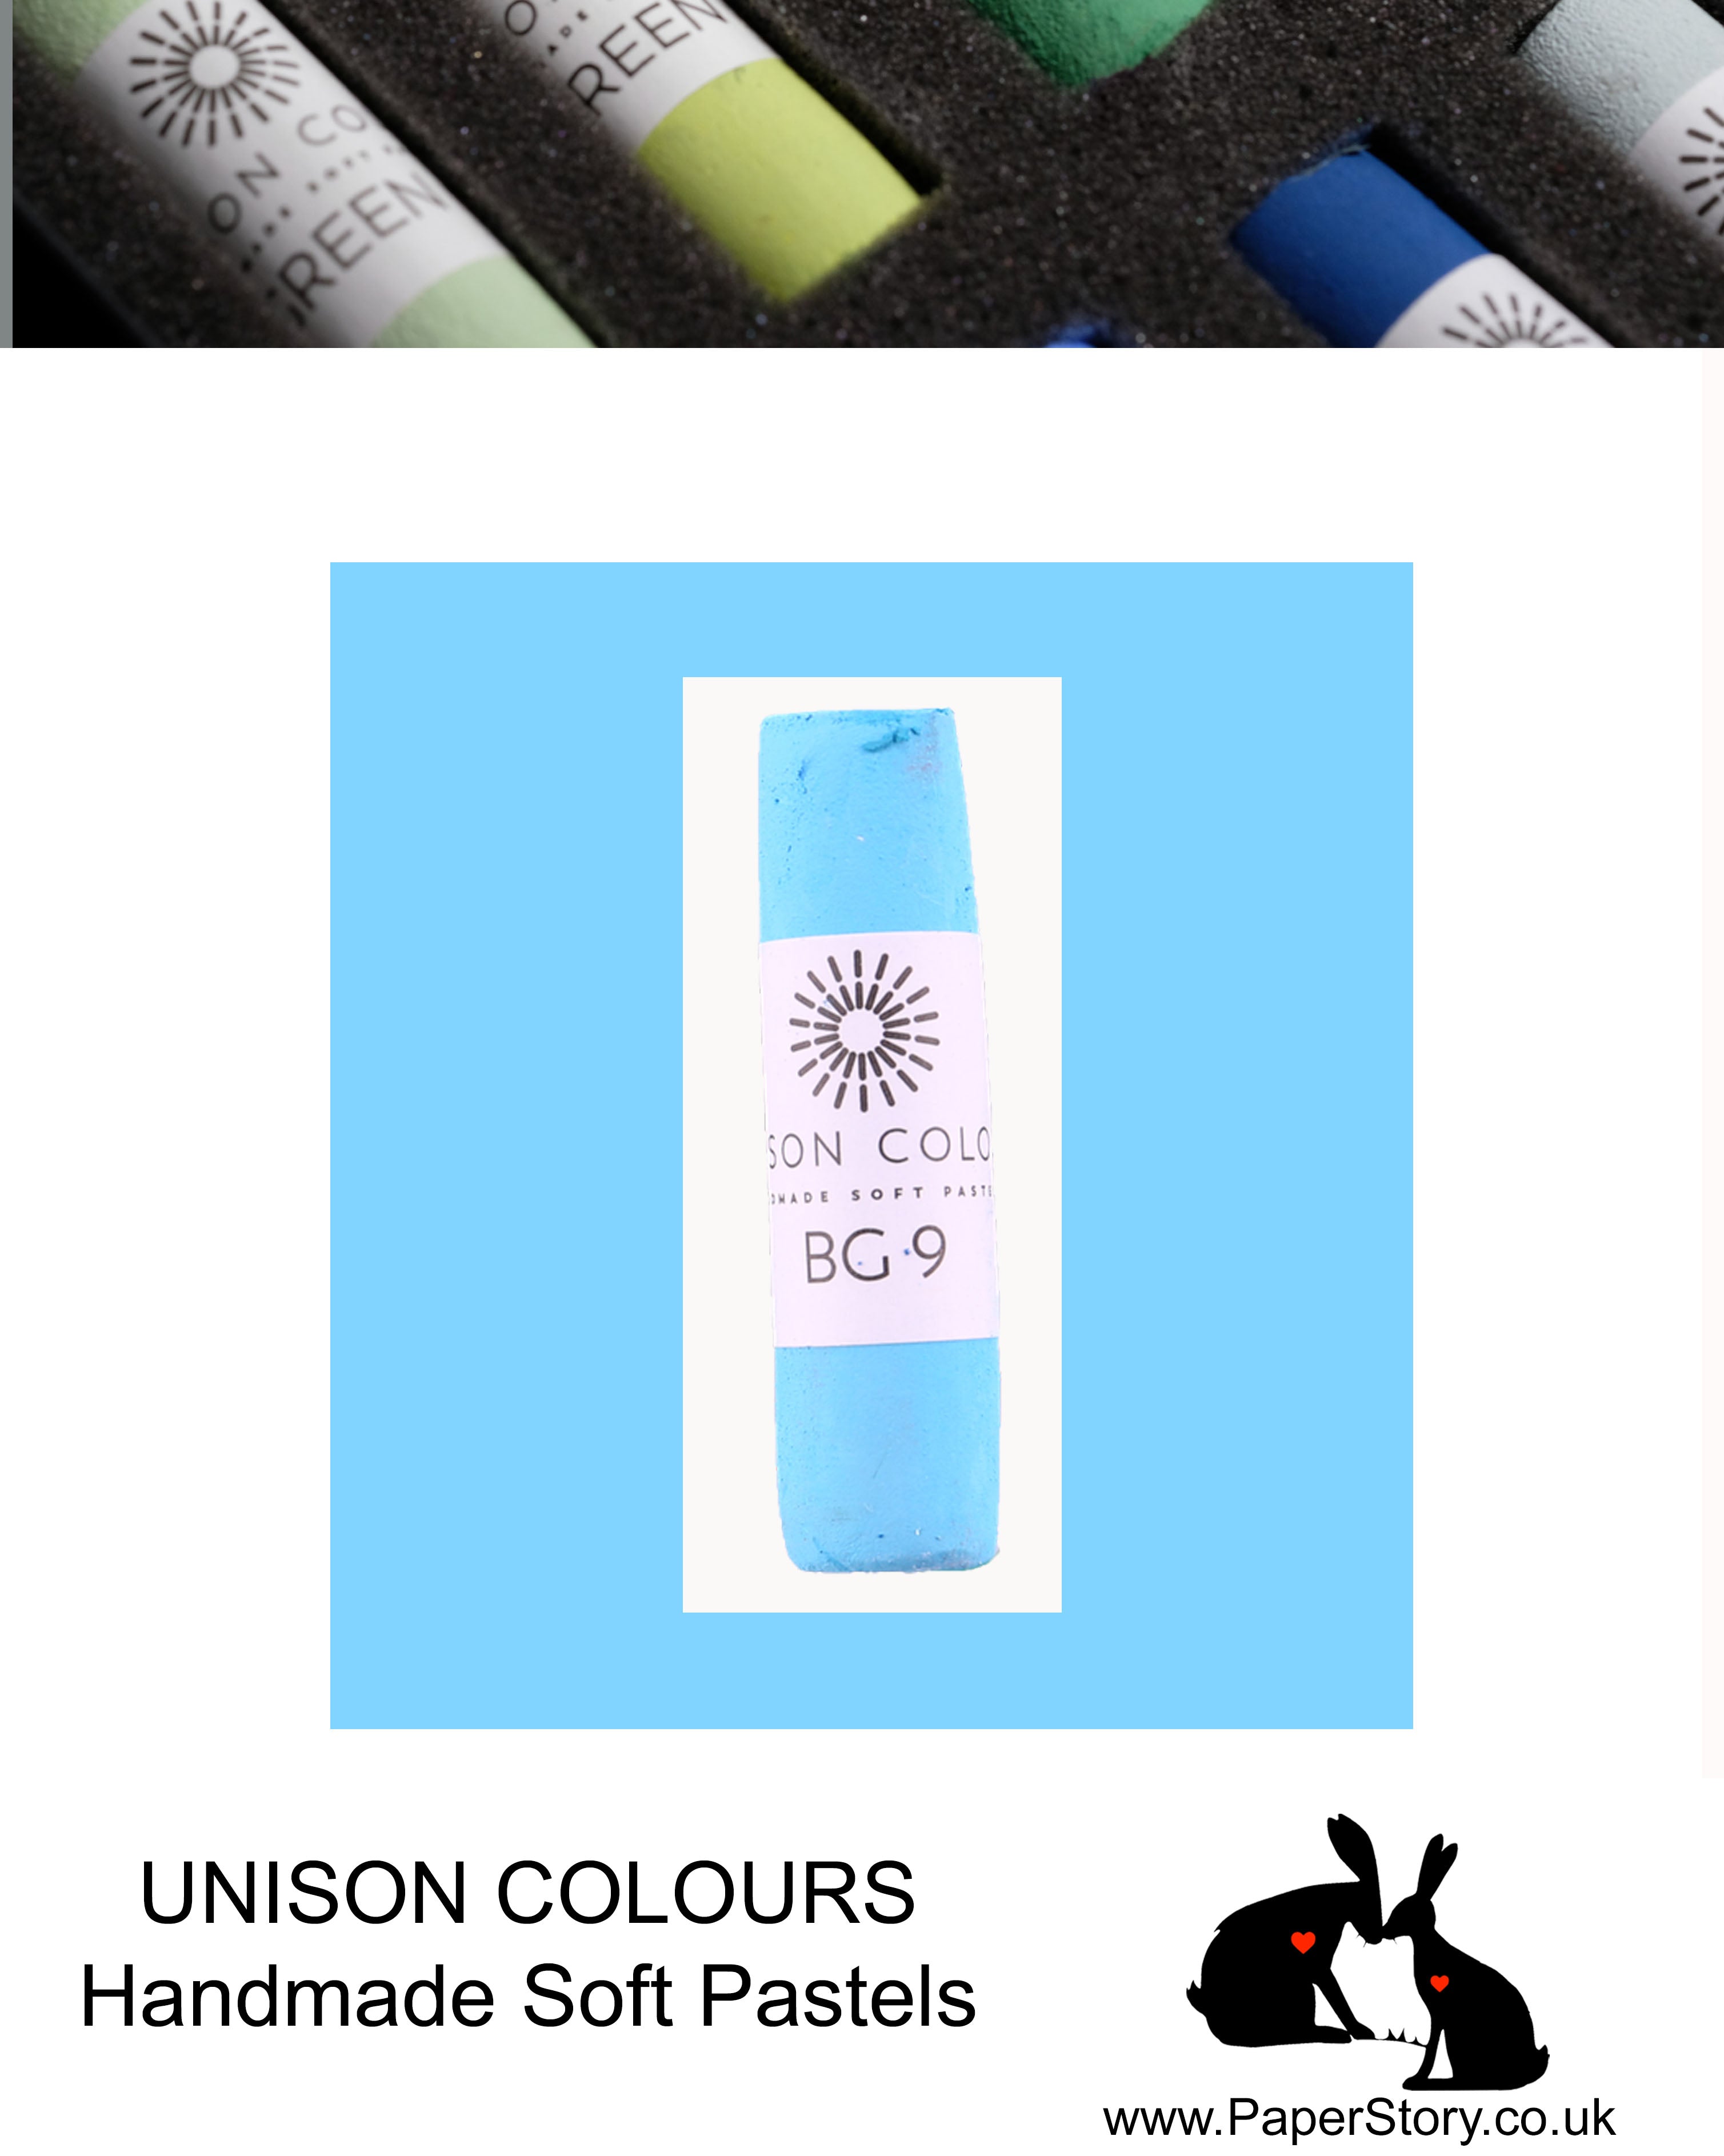 Unison Colour Handmade Soft Pastels Blue Green 09 - Size Regular